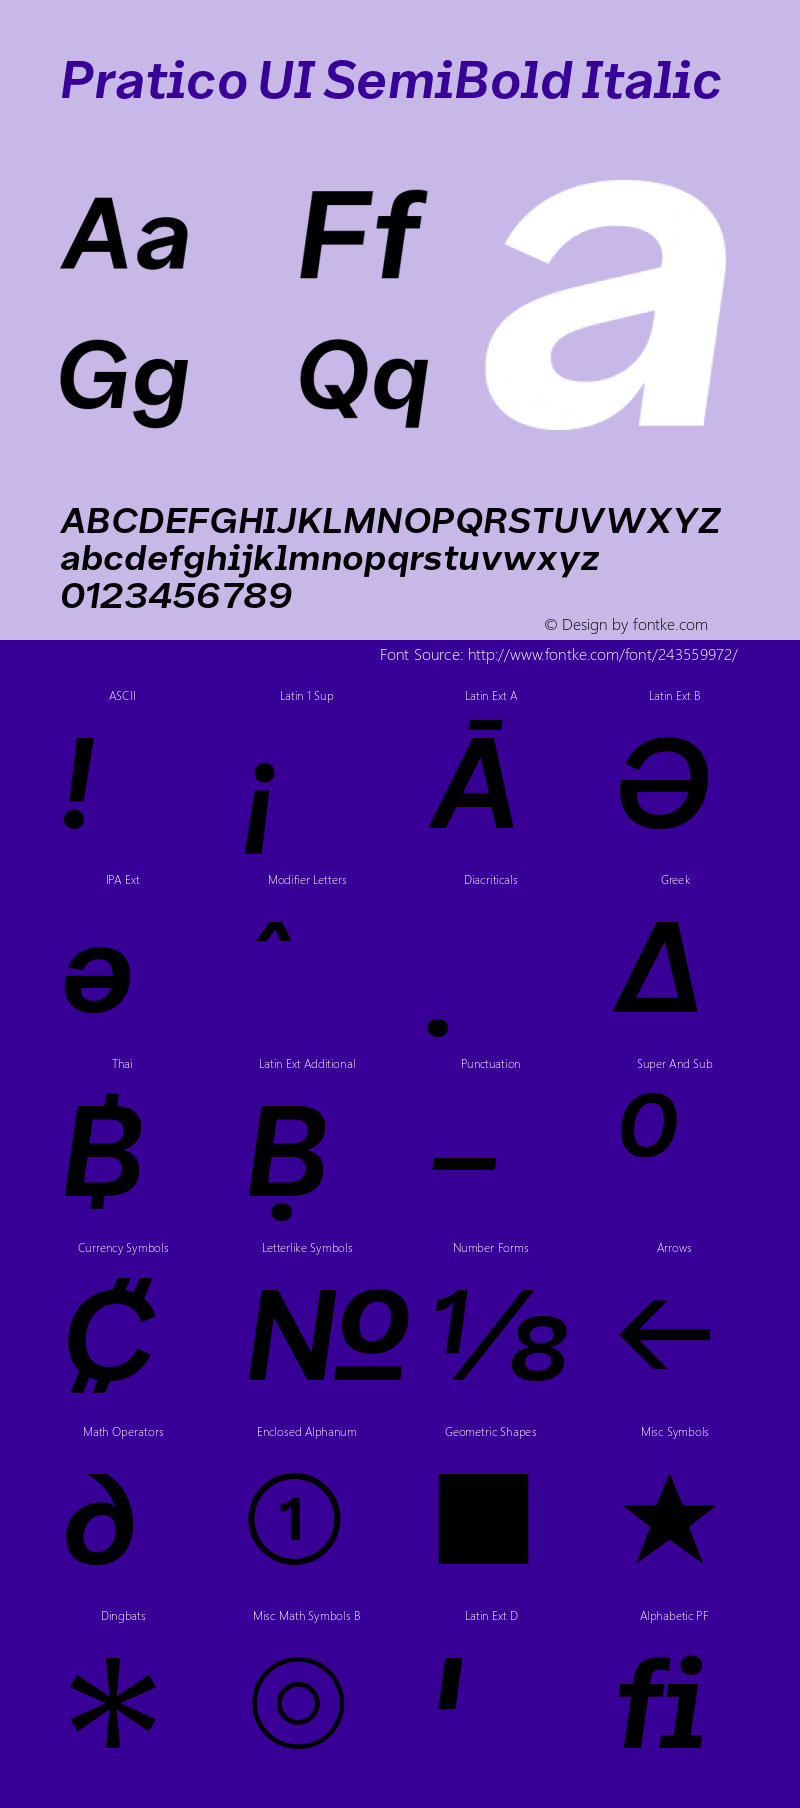 Pratico UI SemiBold Italic Version 1.002;Glyphs 3.1.1 (3148)图片样张